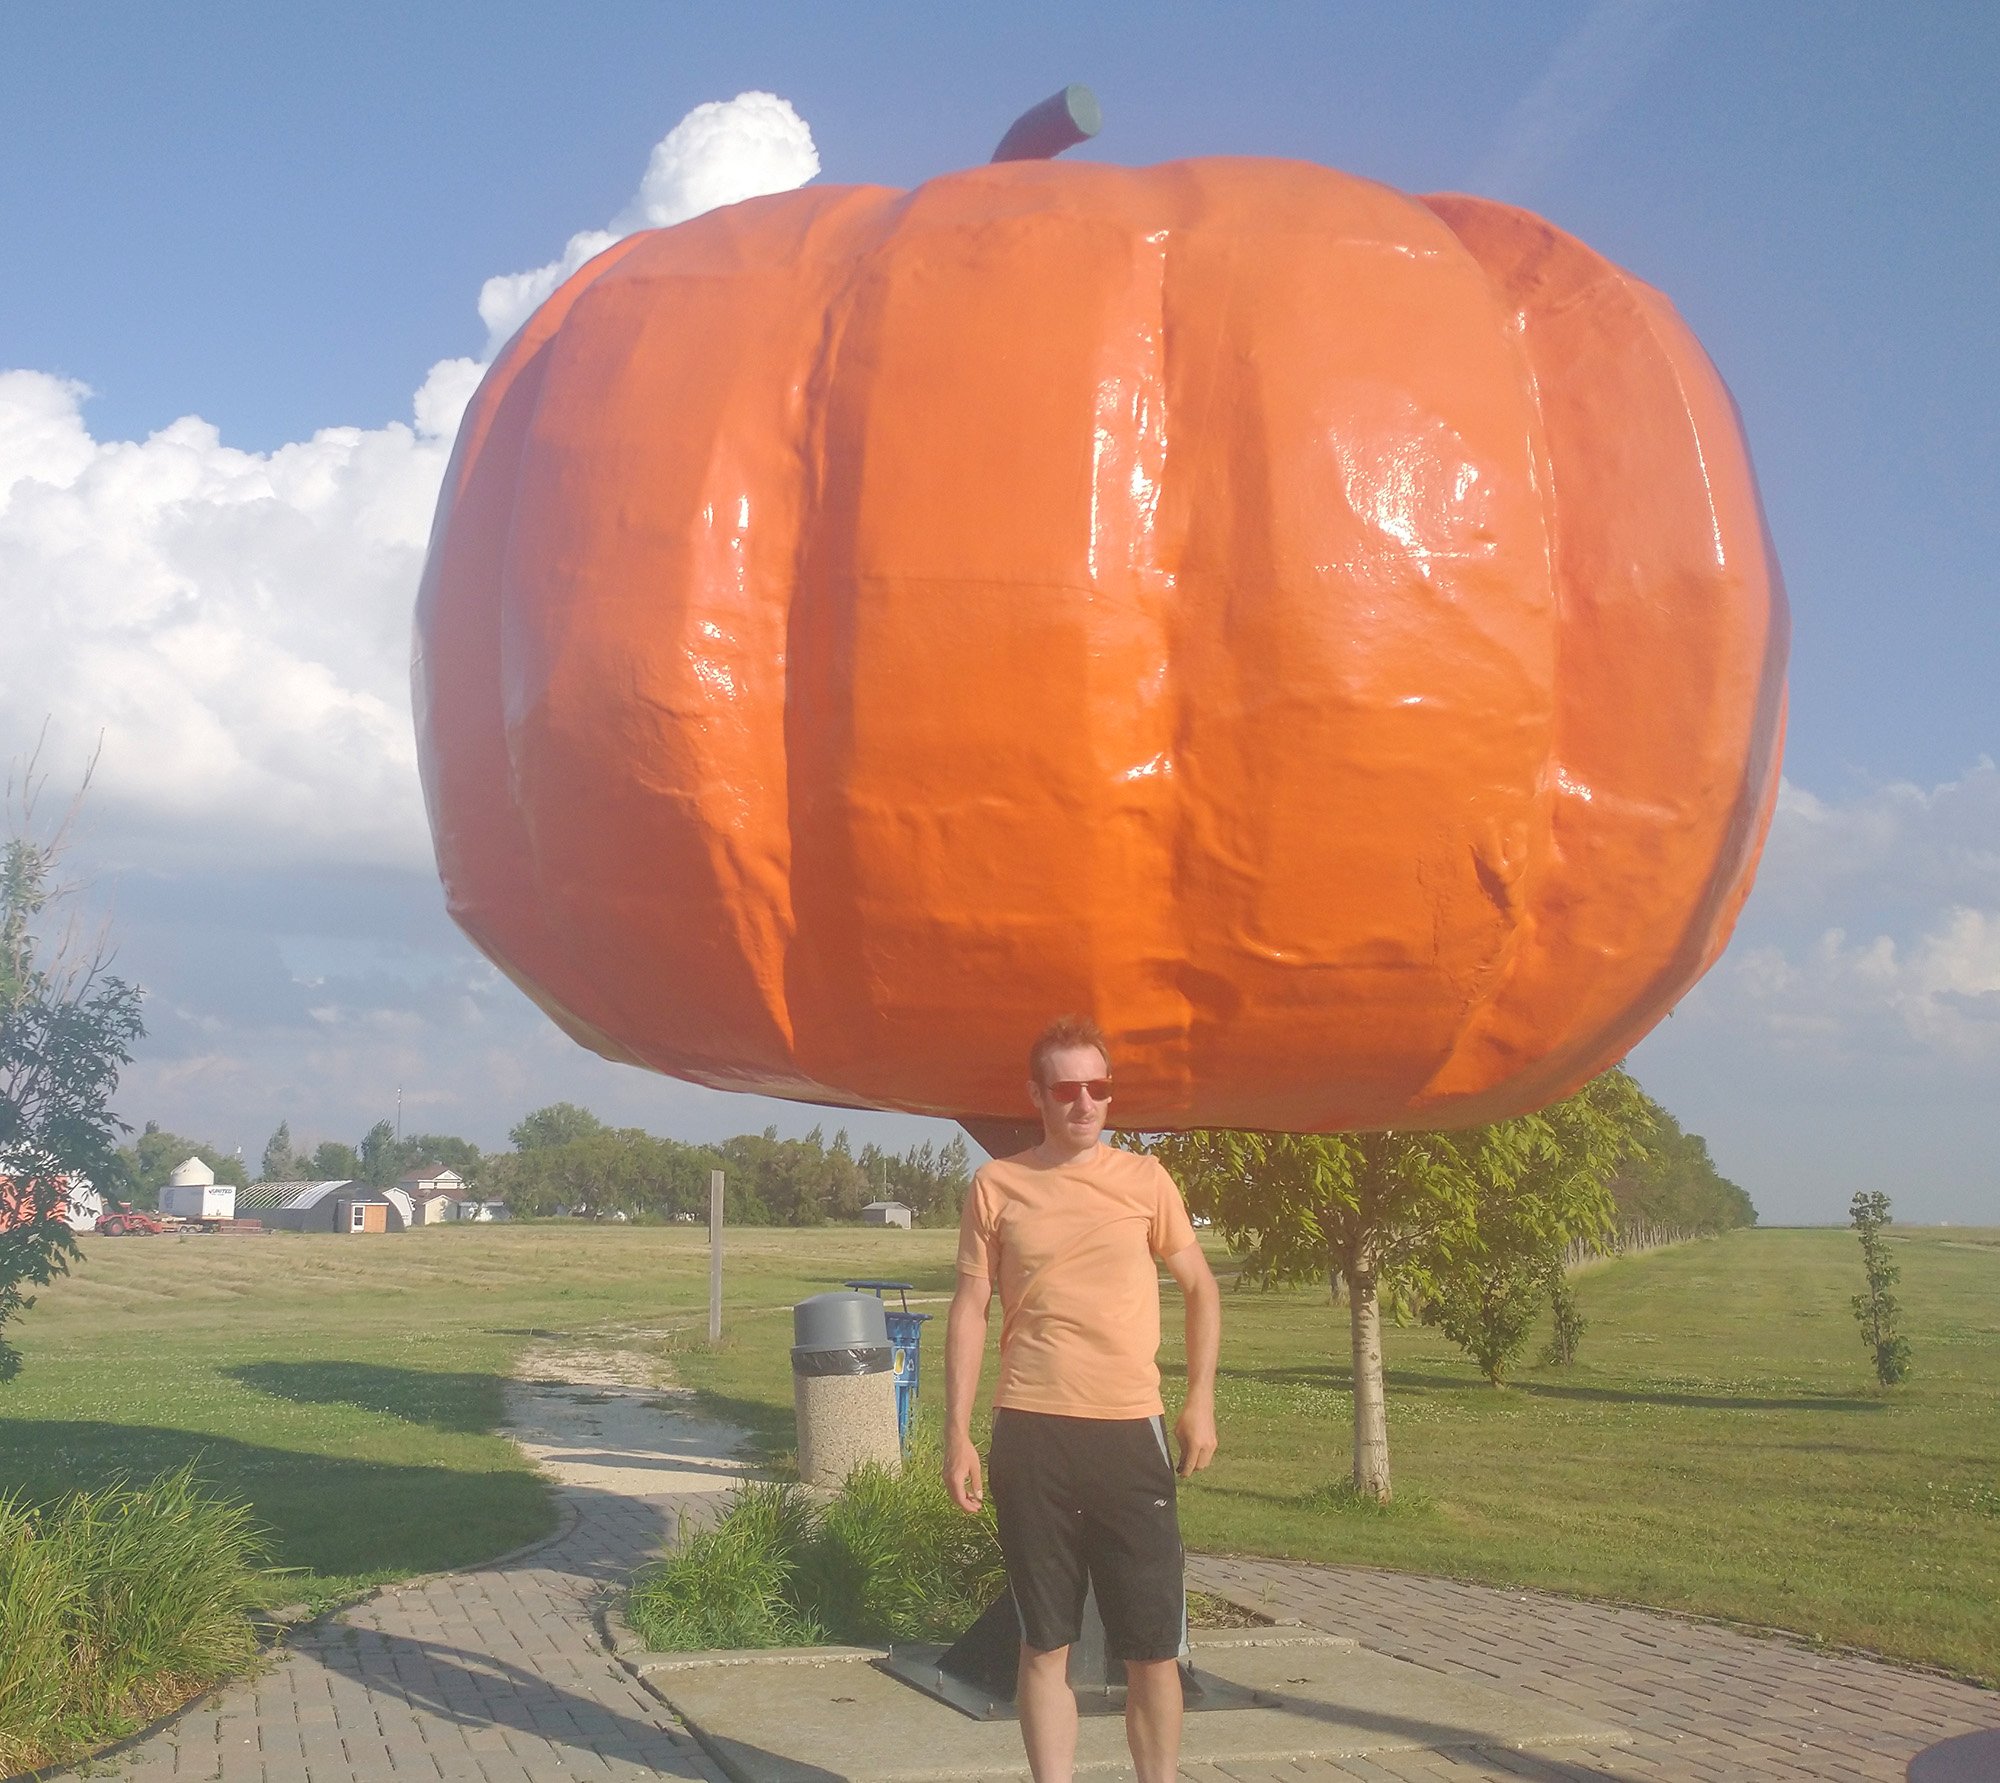 Largest pumpkin! 5/10 could be larger.